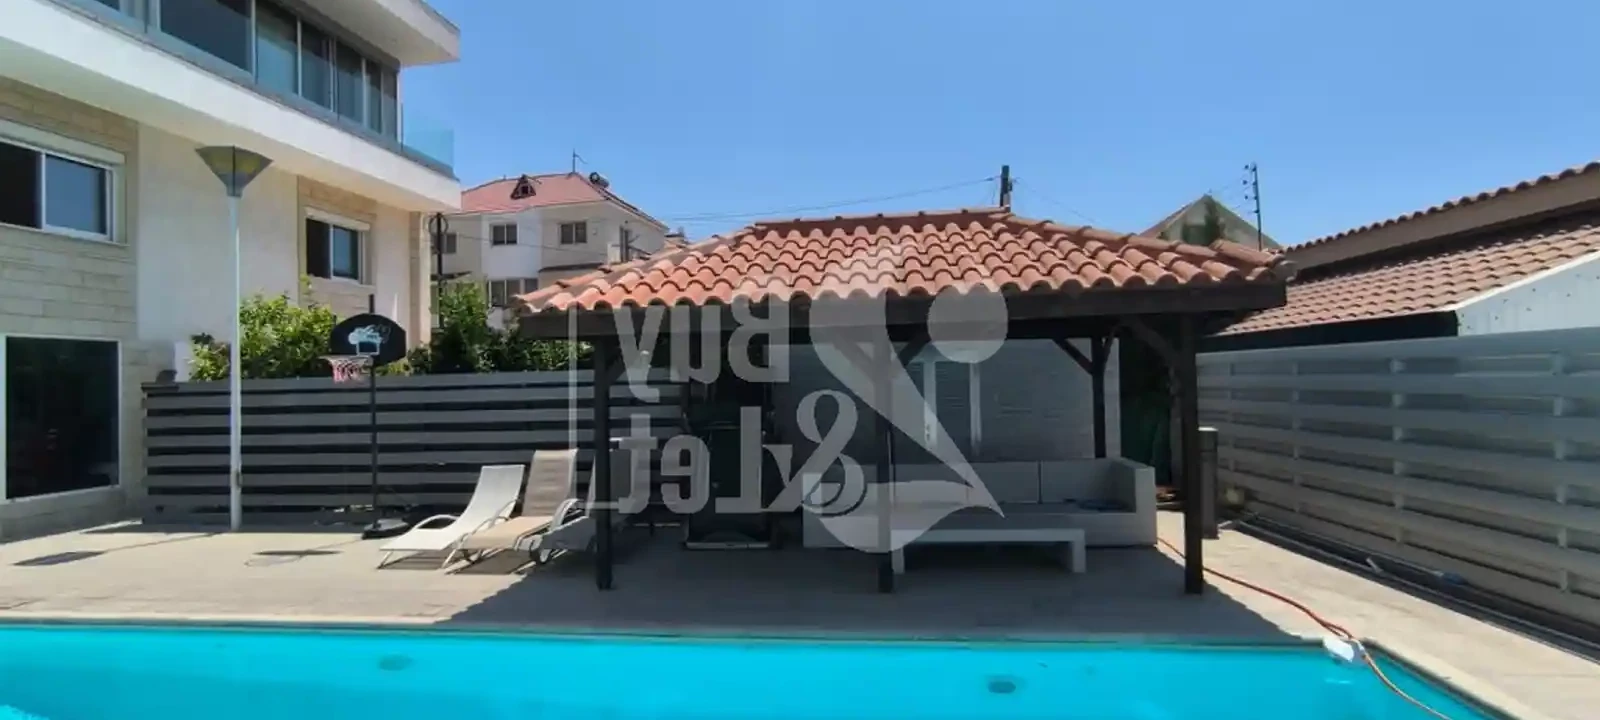 4-bedroom villa fоr sаle €1.700.000, image 1